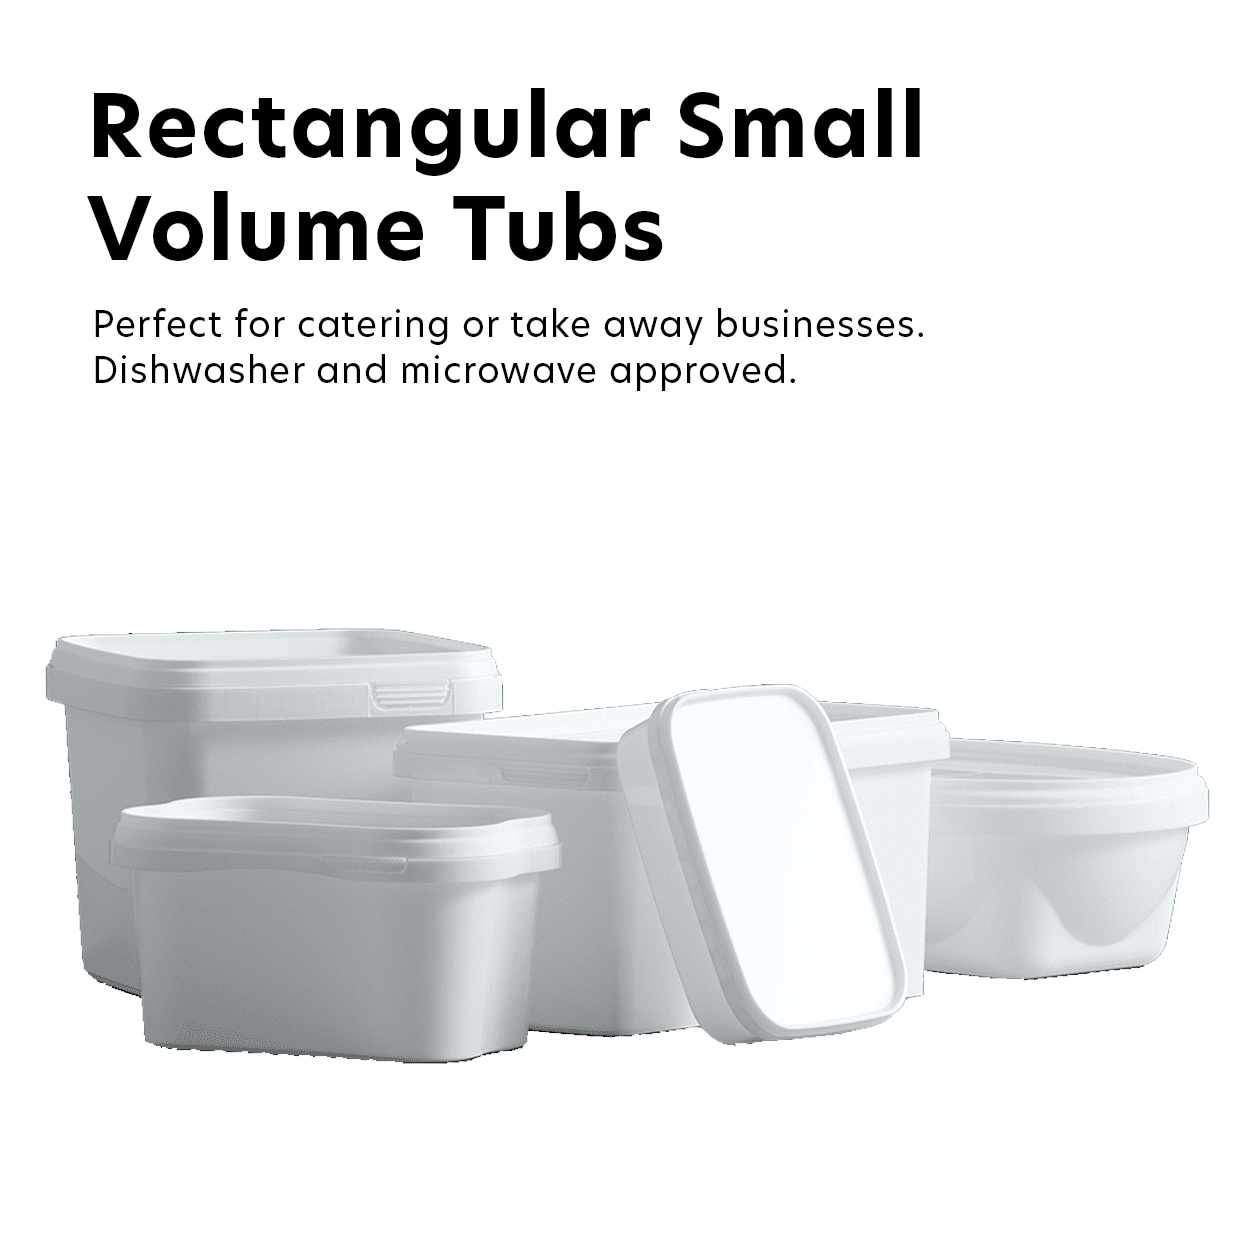 Rectangular Small Volume Tubs